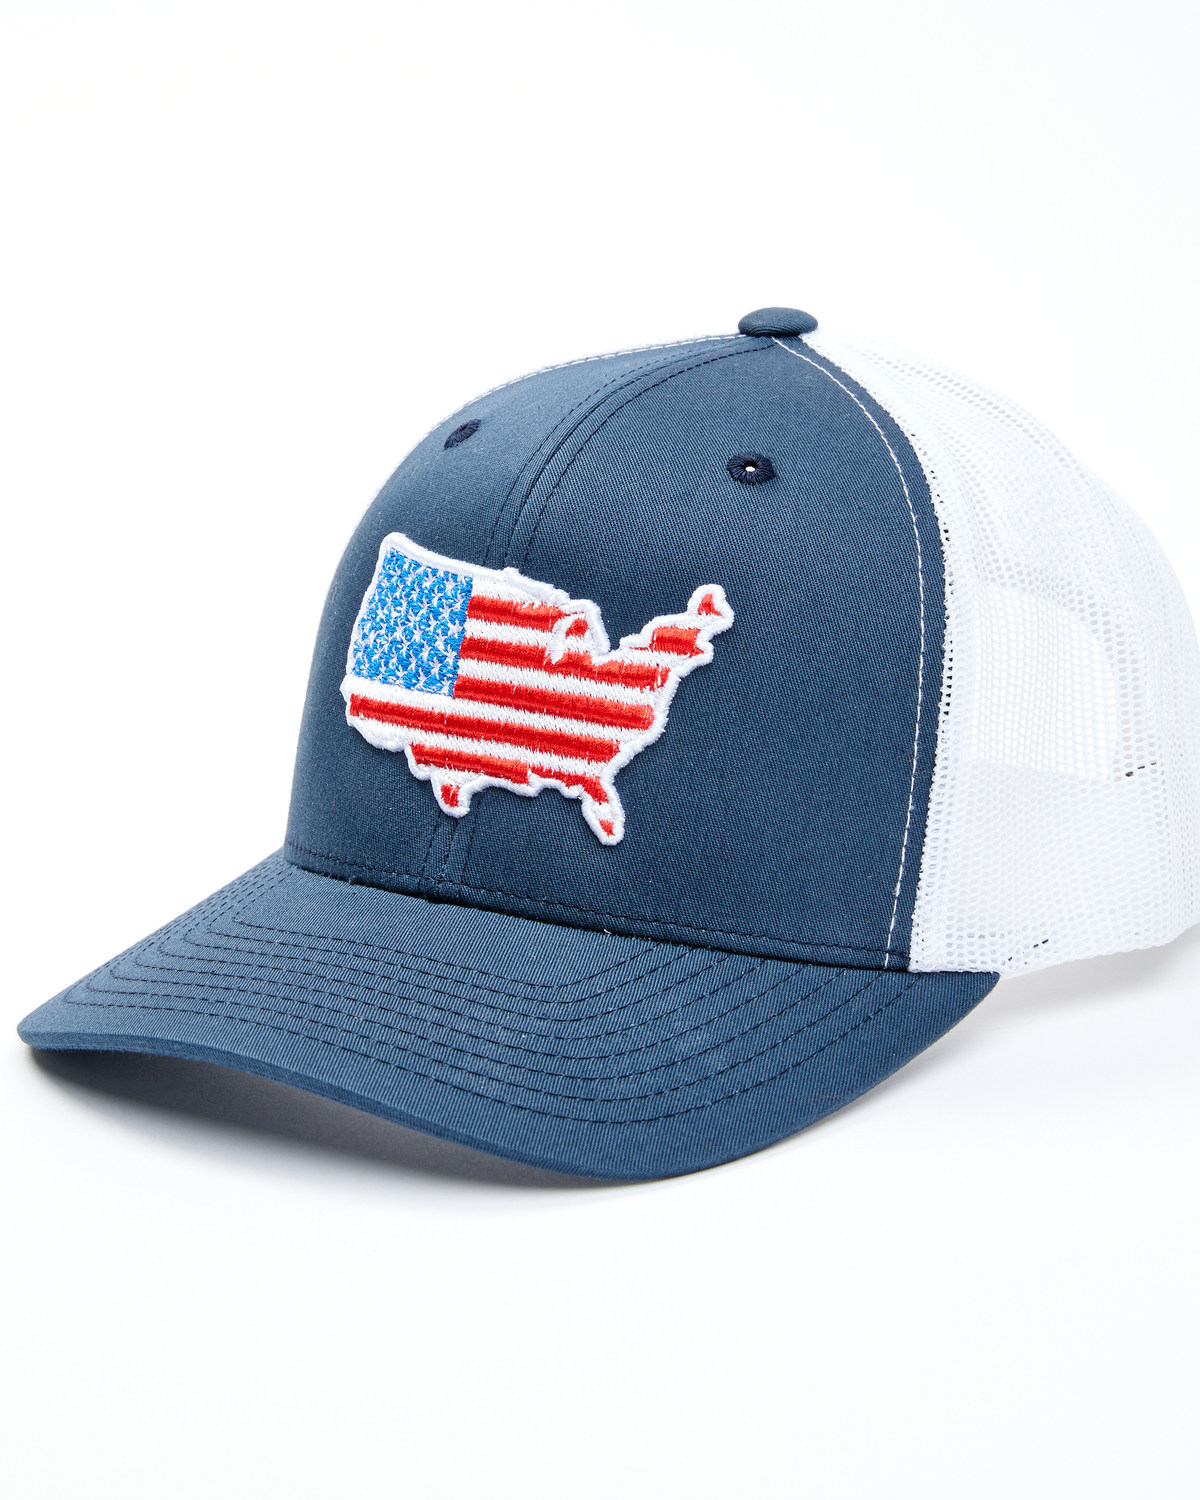 Oil Field Hats Men's Navy American Flag US Patch Mesh-Back Ball Cap